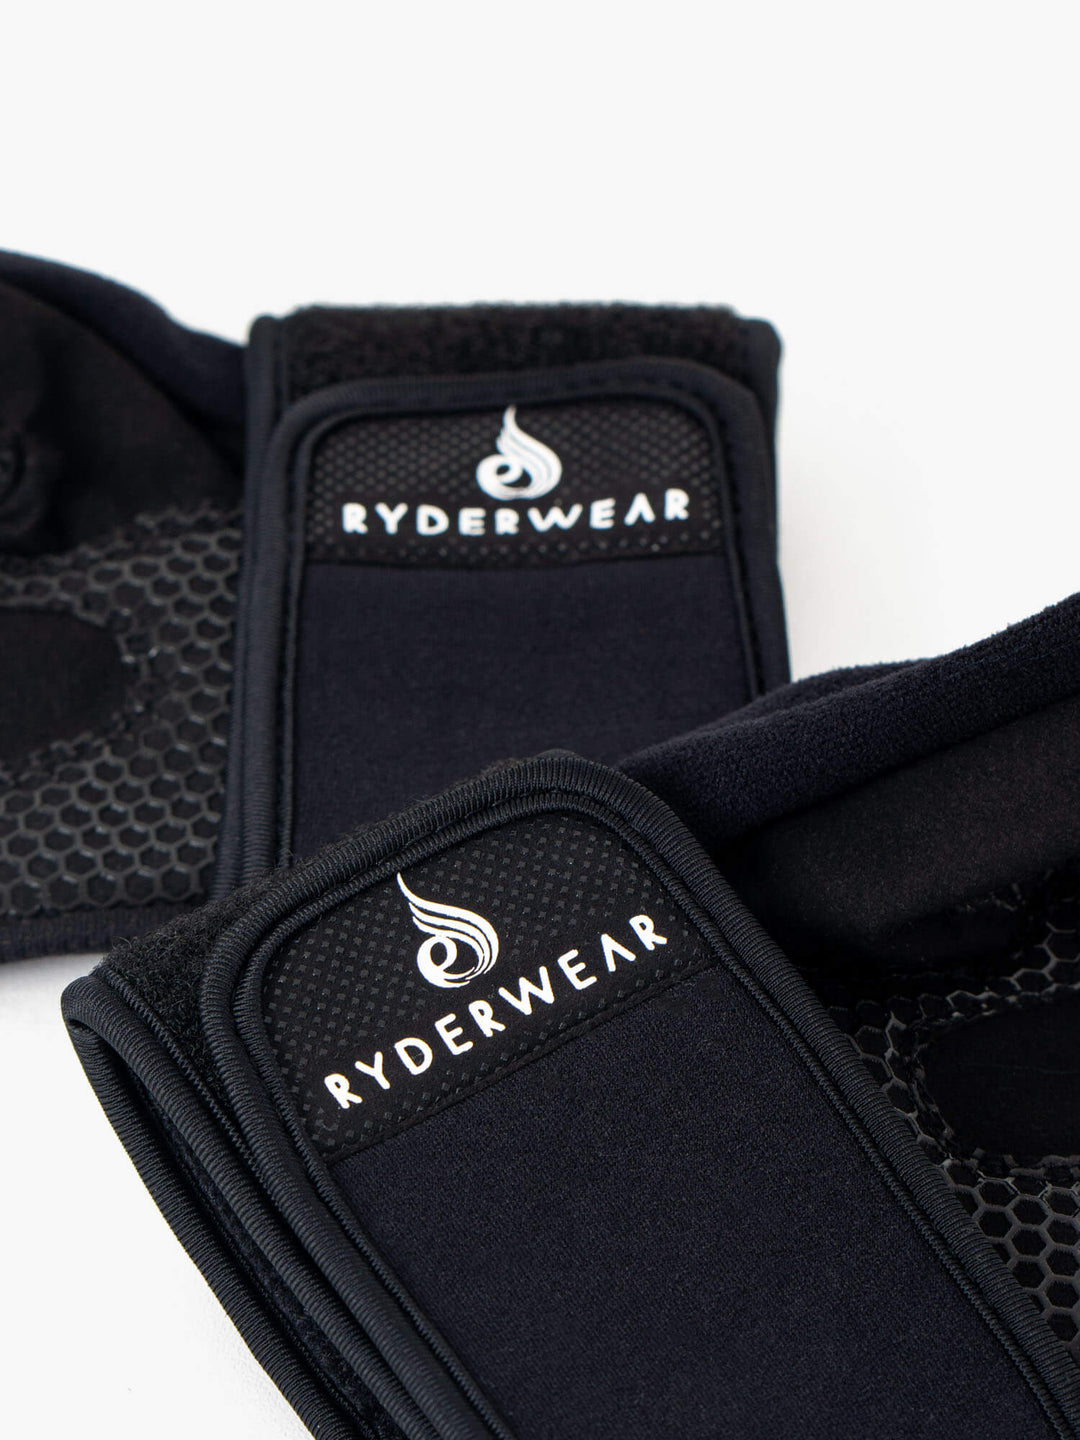 Wrap Lifting Gloves - Black Accessories Ryderwear 